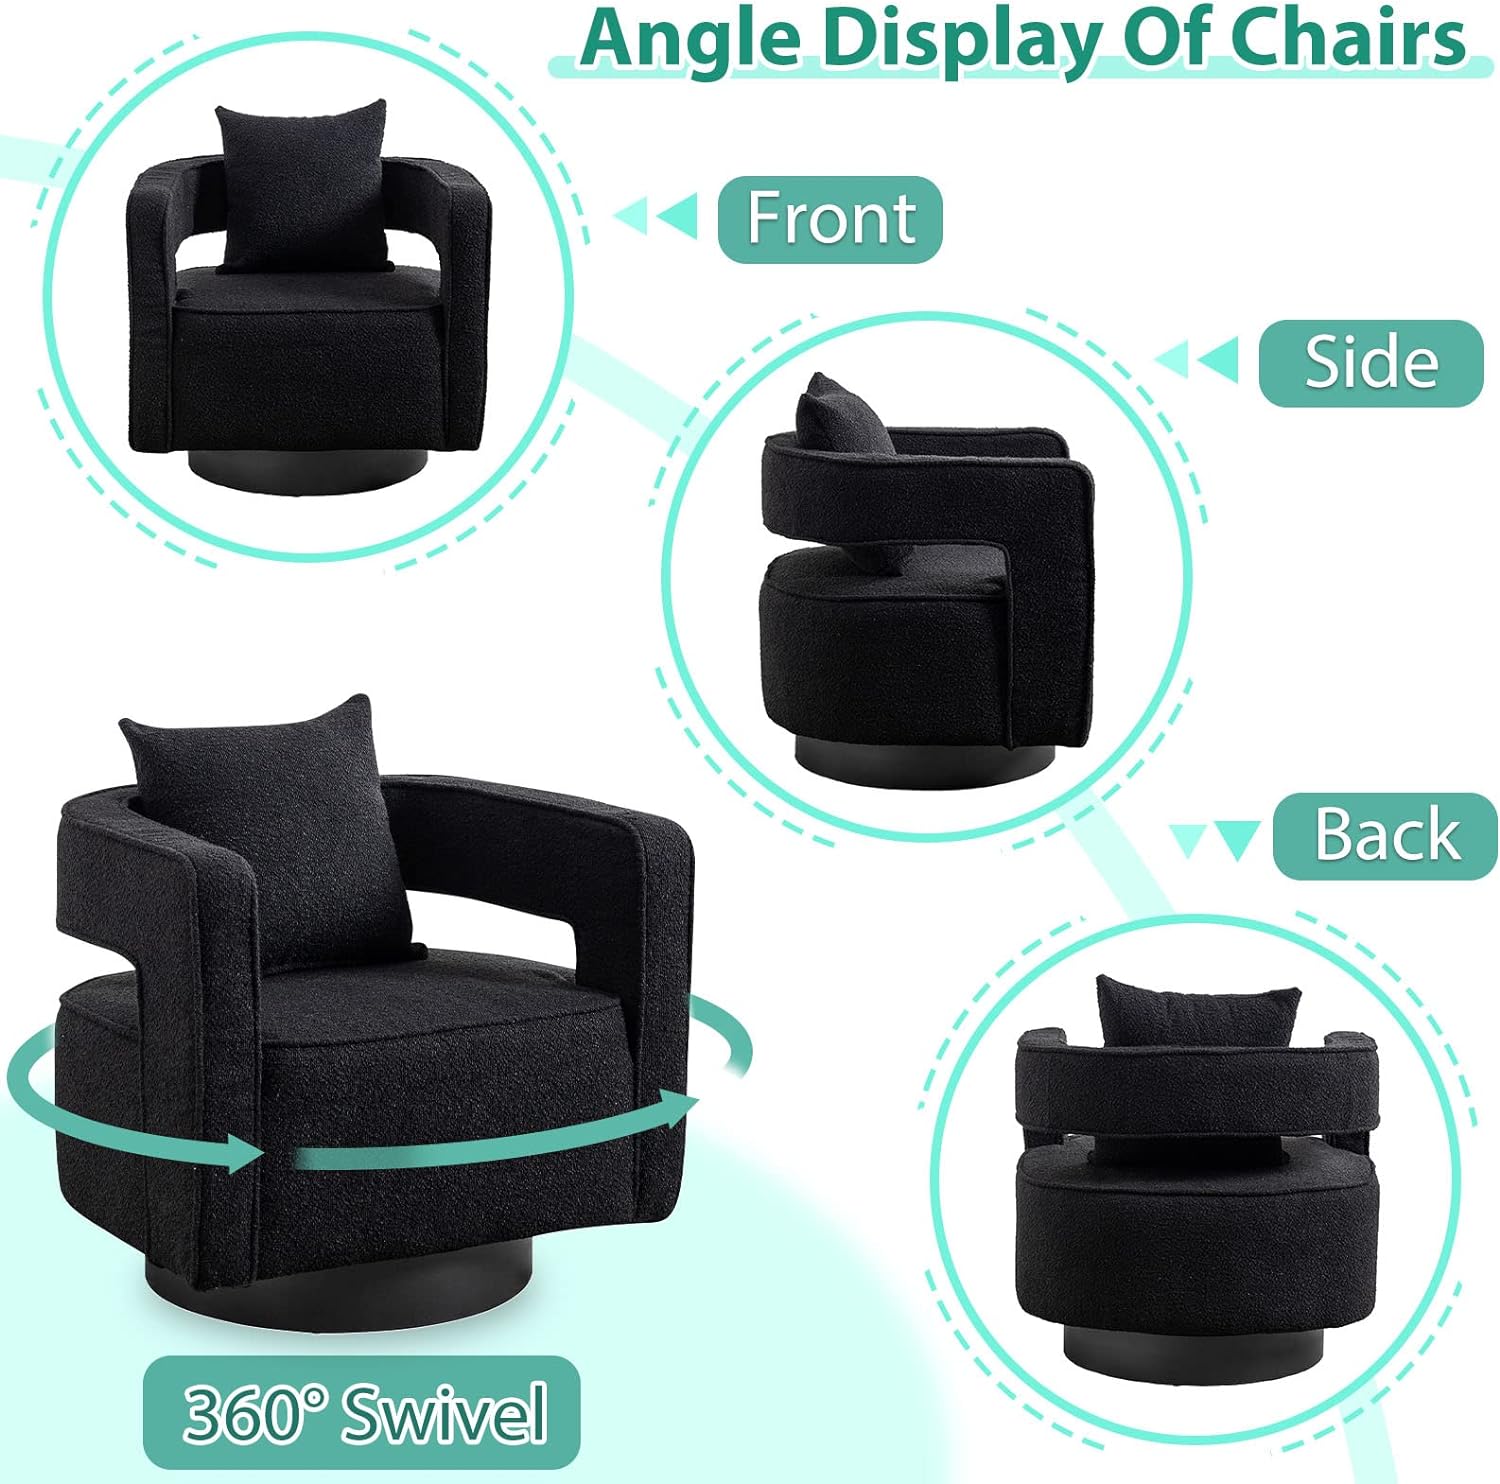 ODUWA swivel base armchair angle displays